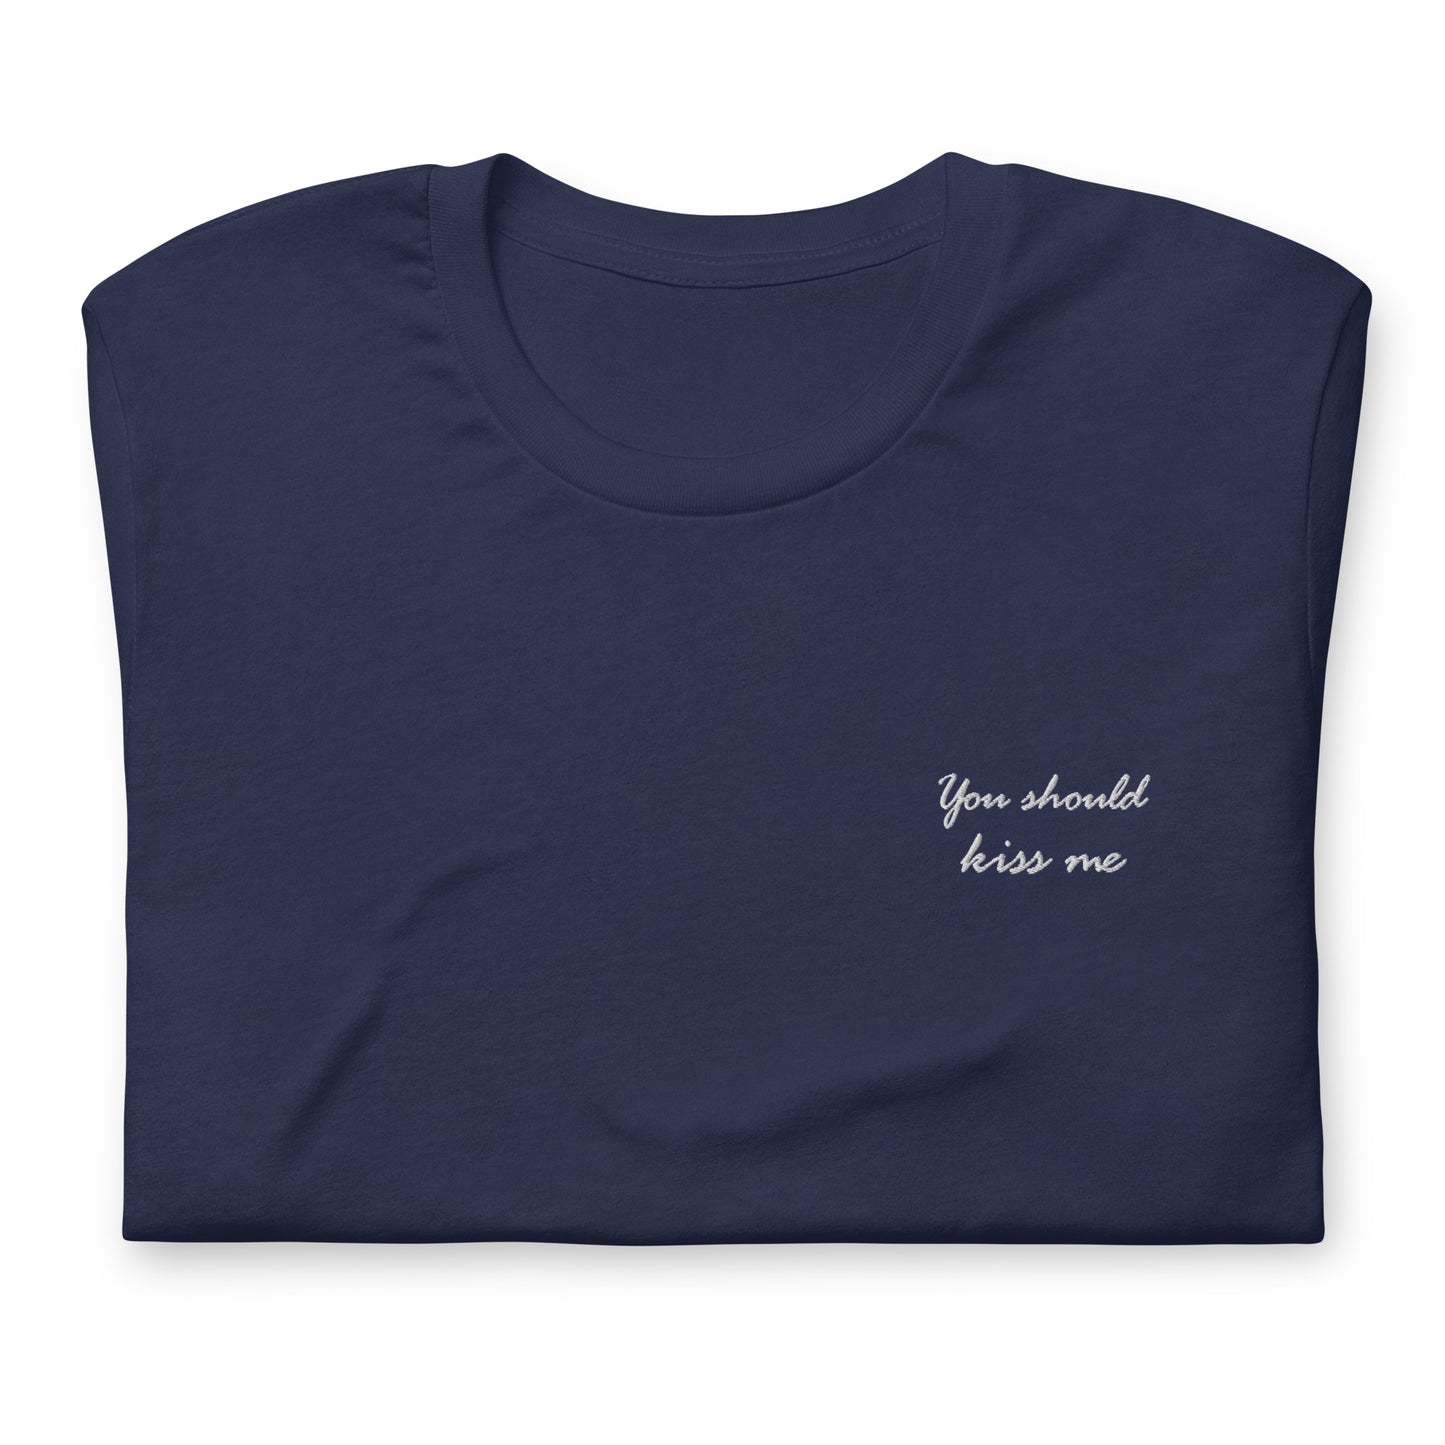 You should kiss me - besticktes T-Shirt